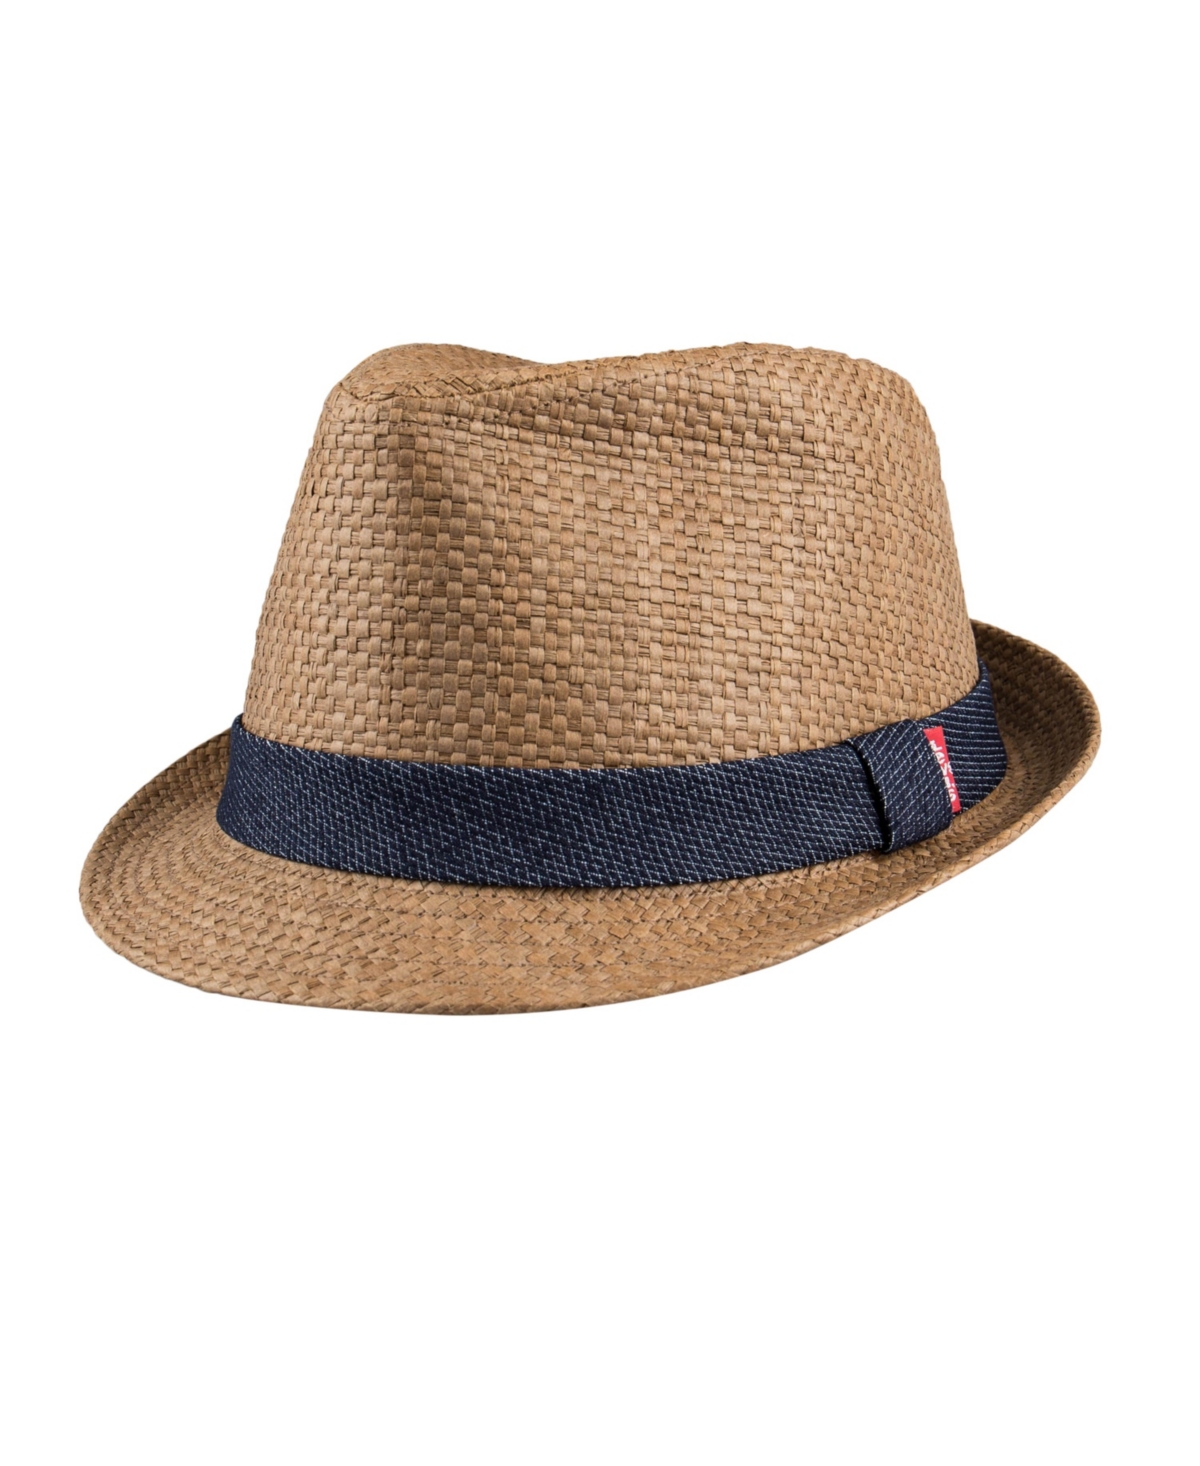 Men's Denim Band Straw Fedora Hat - Navy Blue